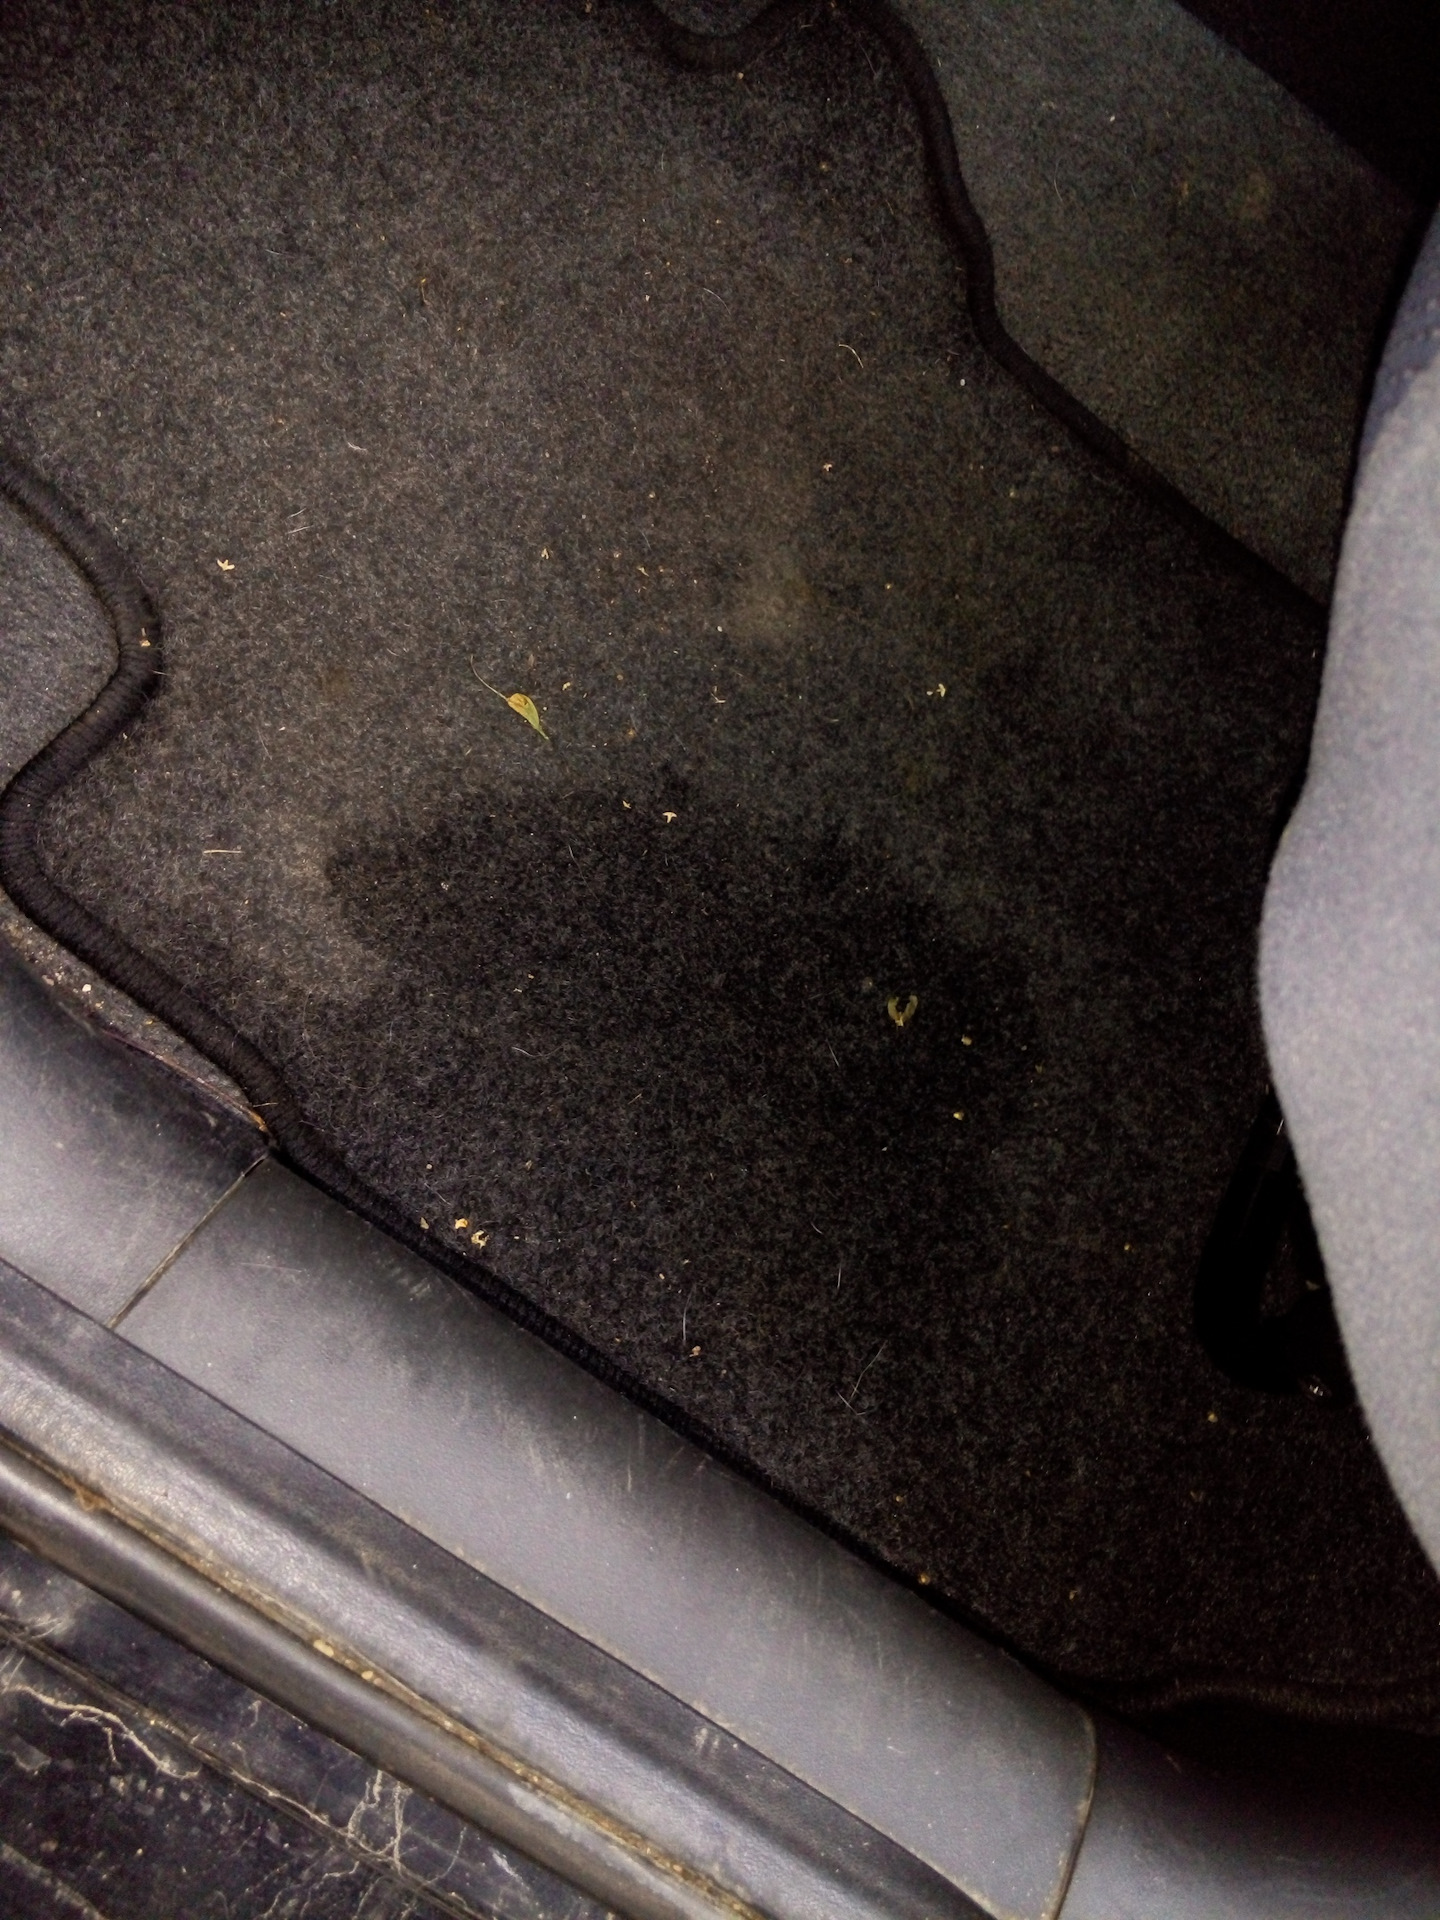 Протекает вода в машину. Мокрый коврик Пежо 307. Задний пассажирский коврик на кардан. Мерседес 211 мокро под ковриком. Tucson вода в салоне.